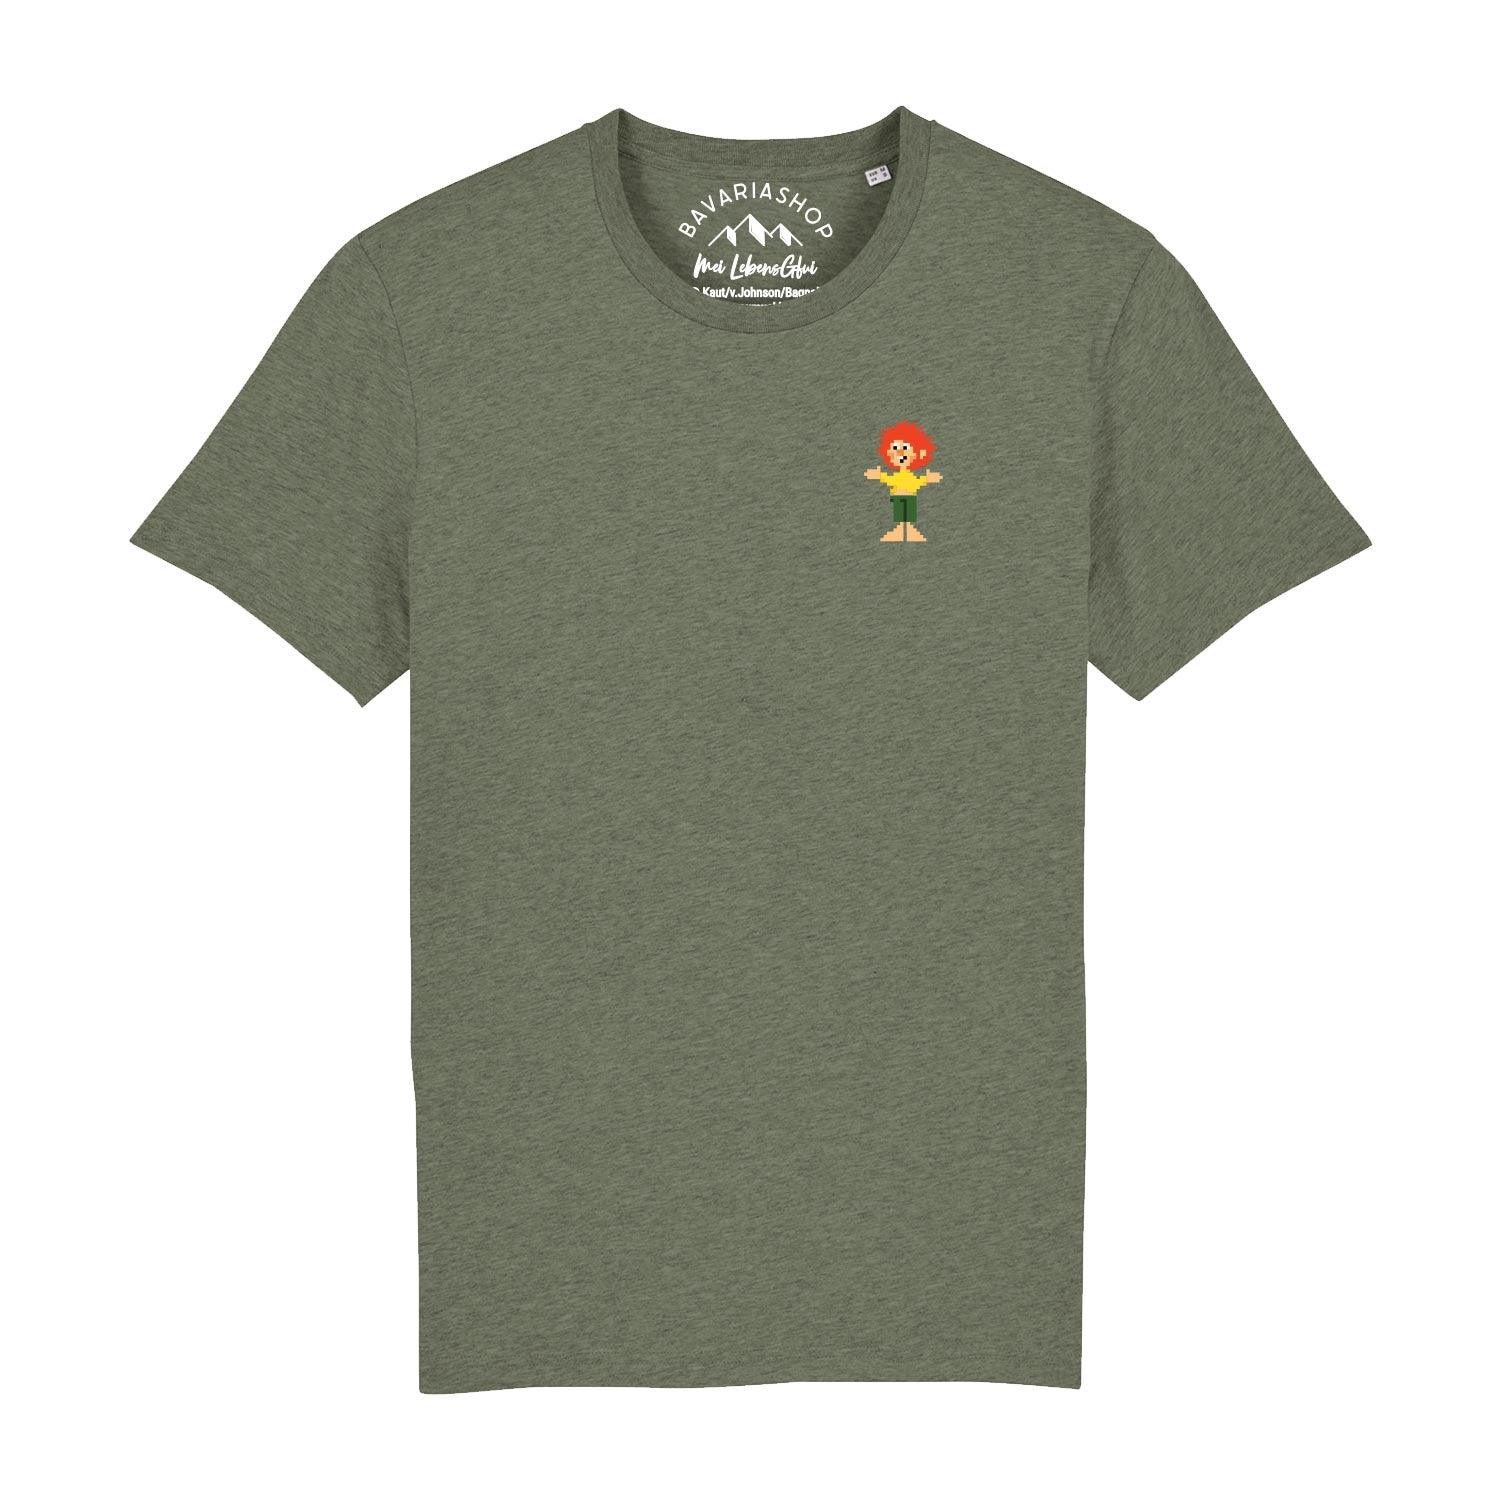 ®Pumuckl T-Shirt "Pixmuckl" - bavariashop - mei LebensGfui